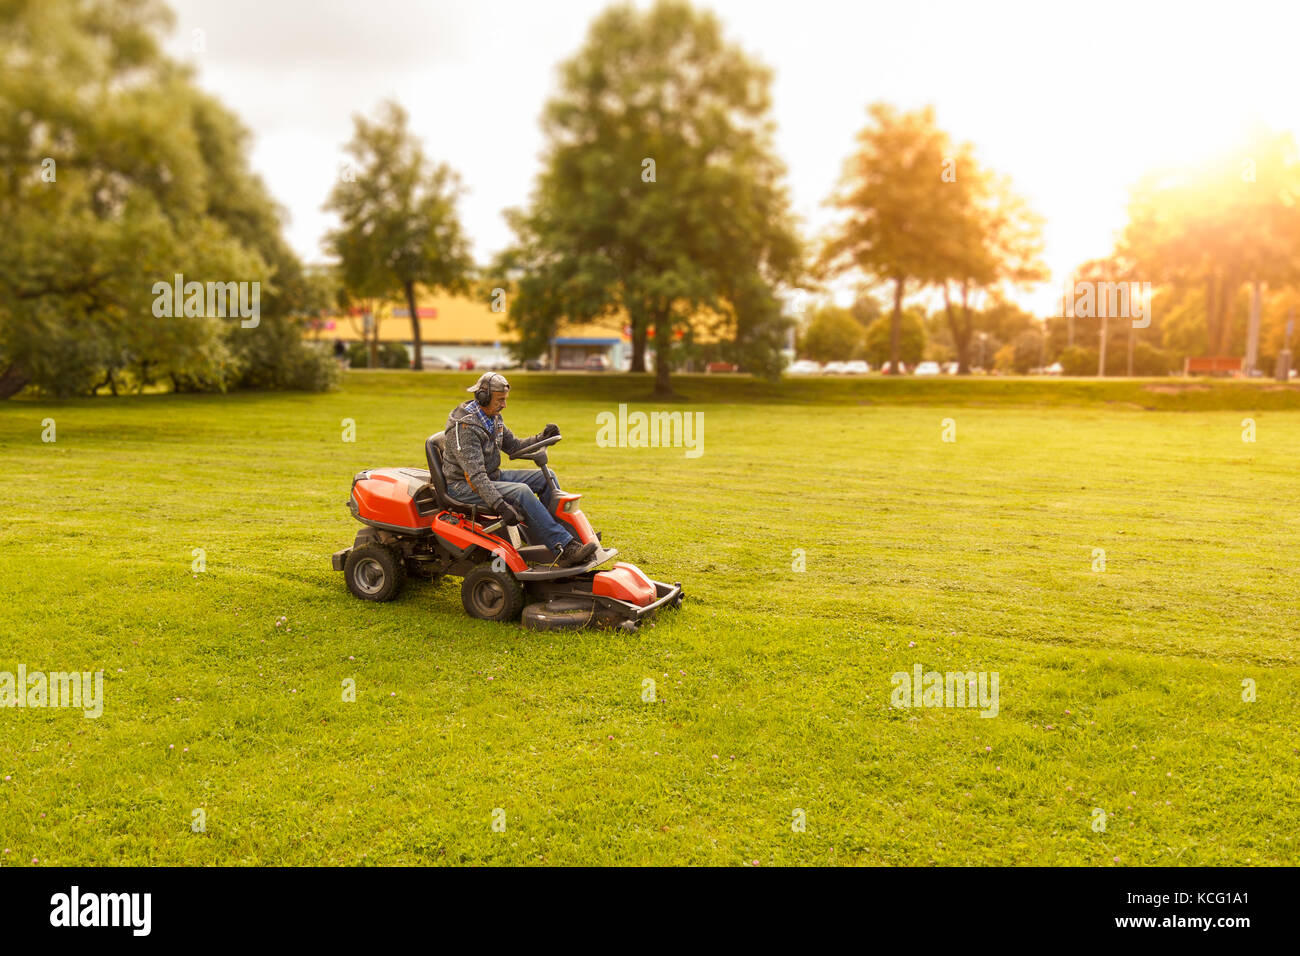 Rasenmäher traktor -Fotos und -Bildmaterial in hoher Auflösung – Alamy